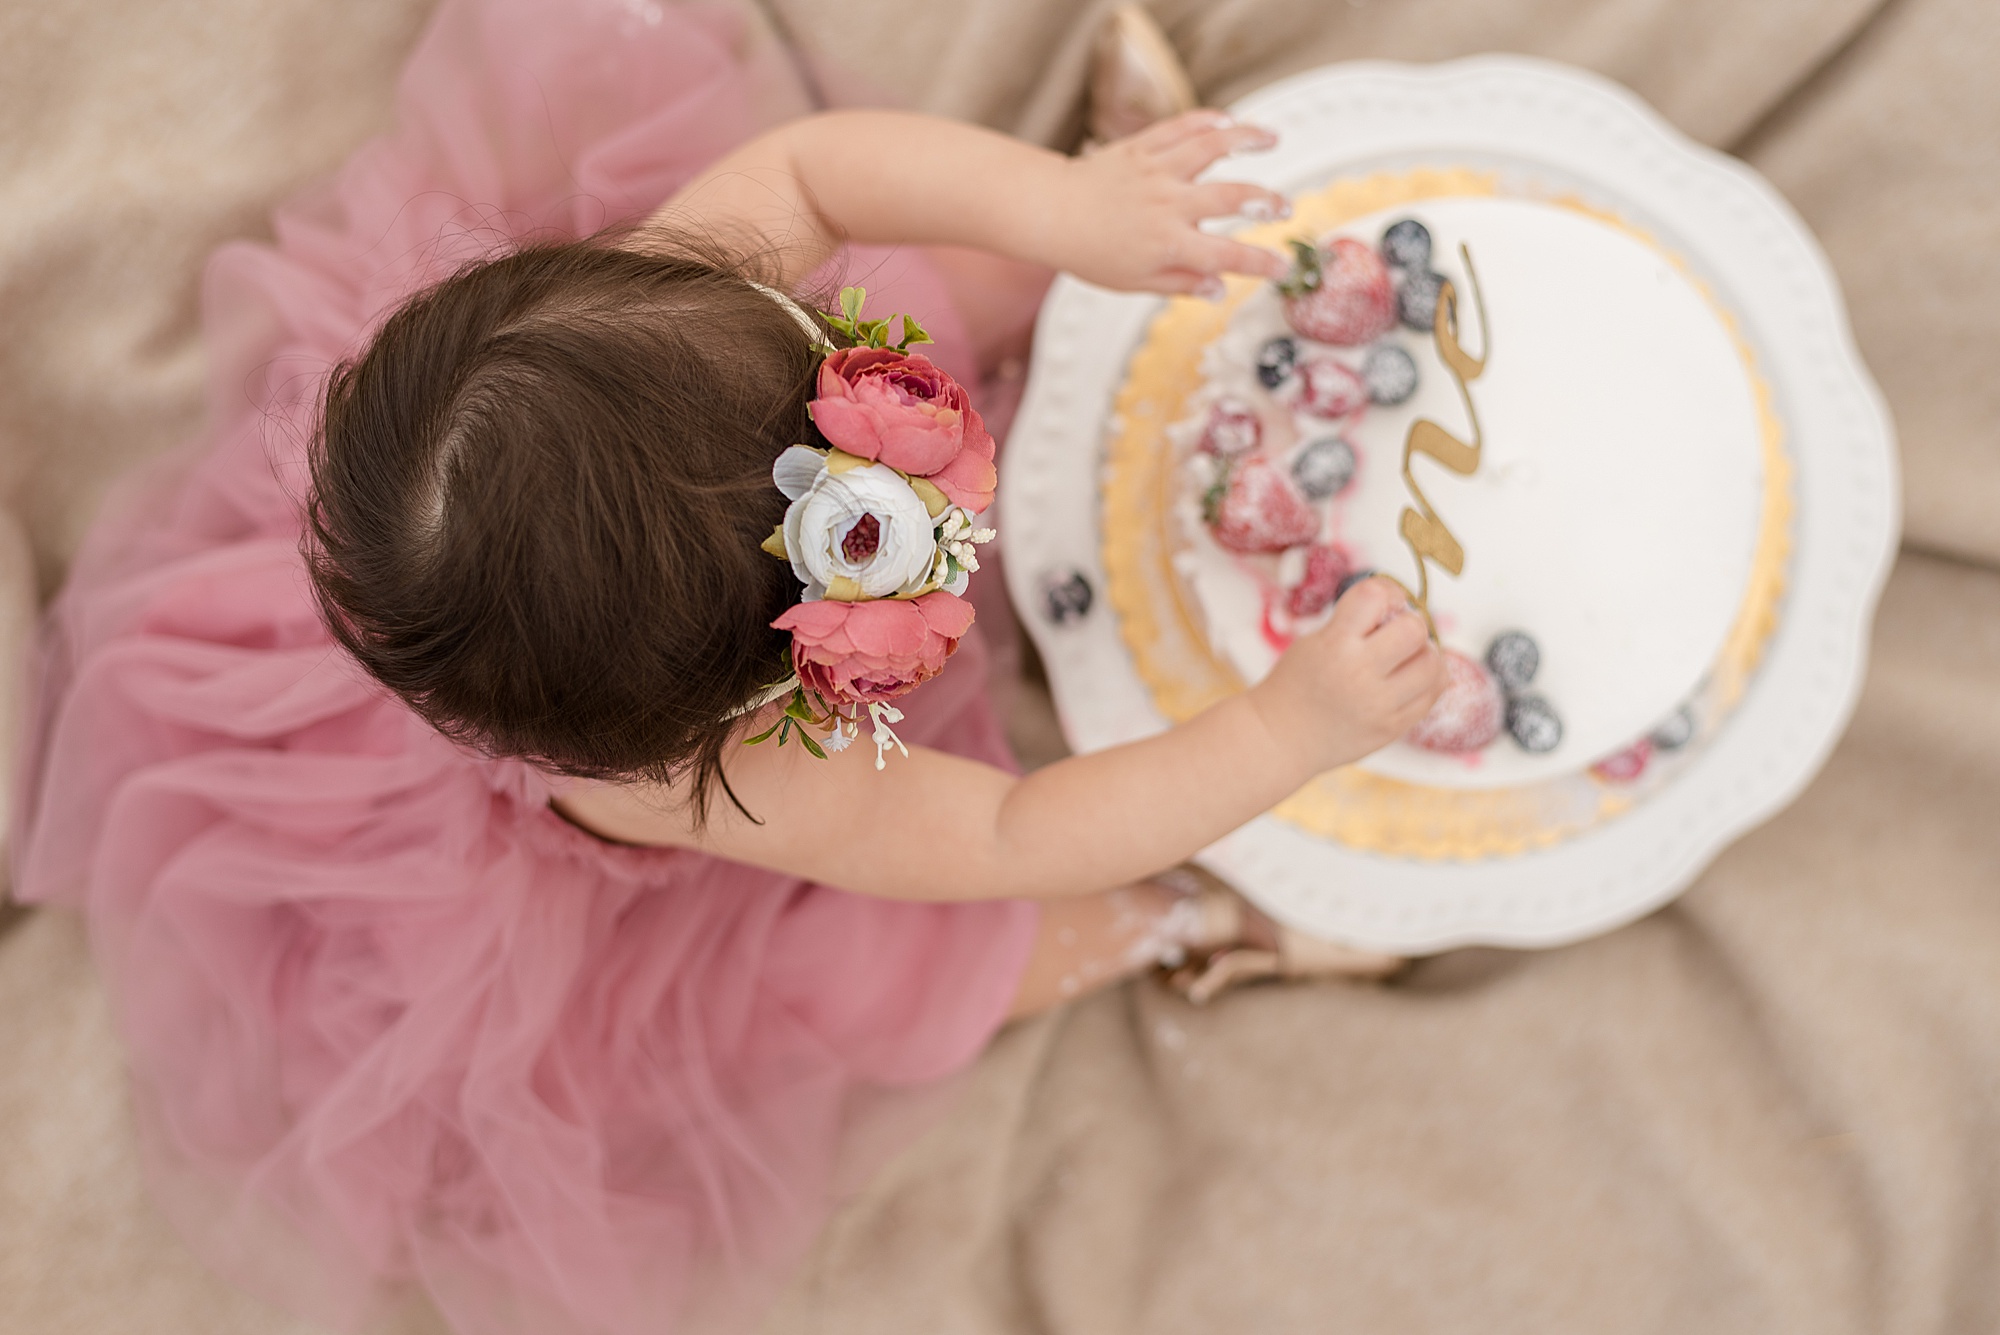 baby girl digs into birthday cake 